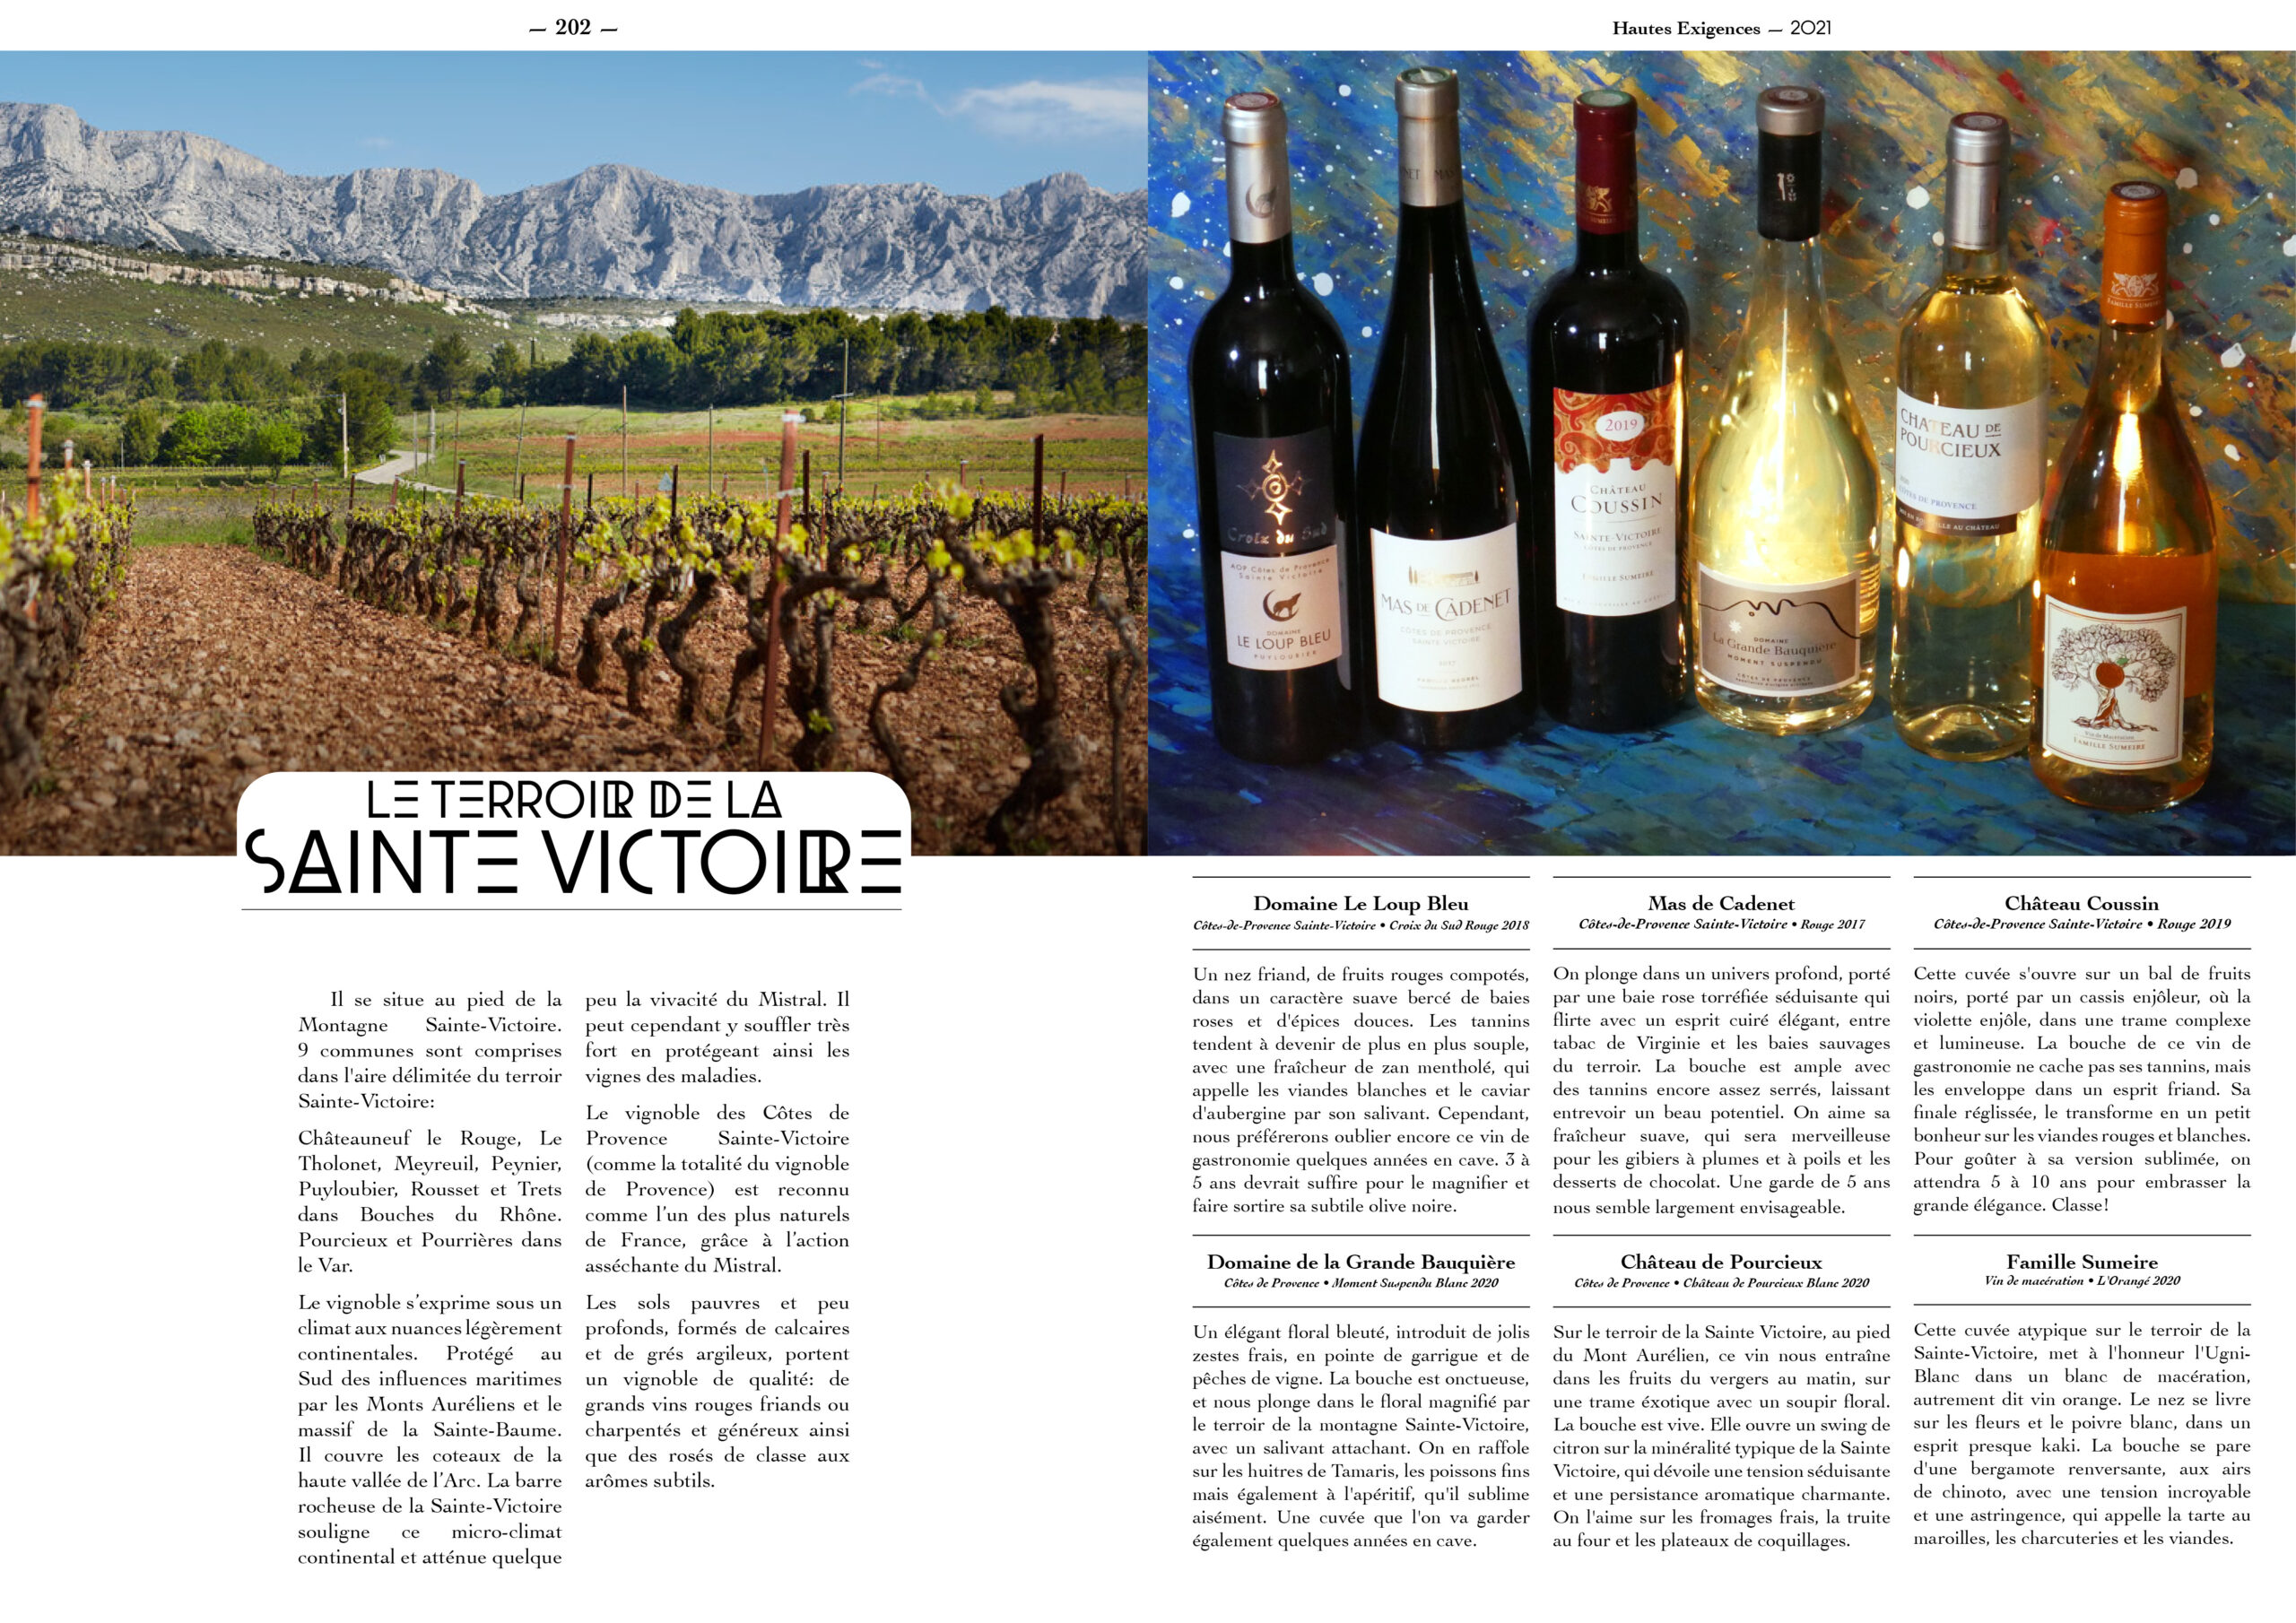 Hautes Exigences Magazine Hors Serie 2021 page 200-201